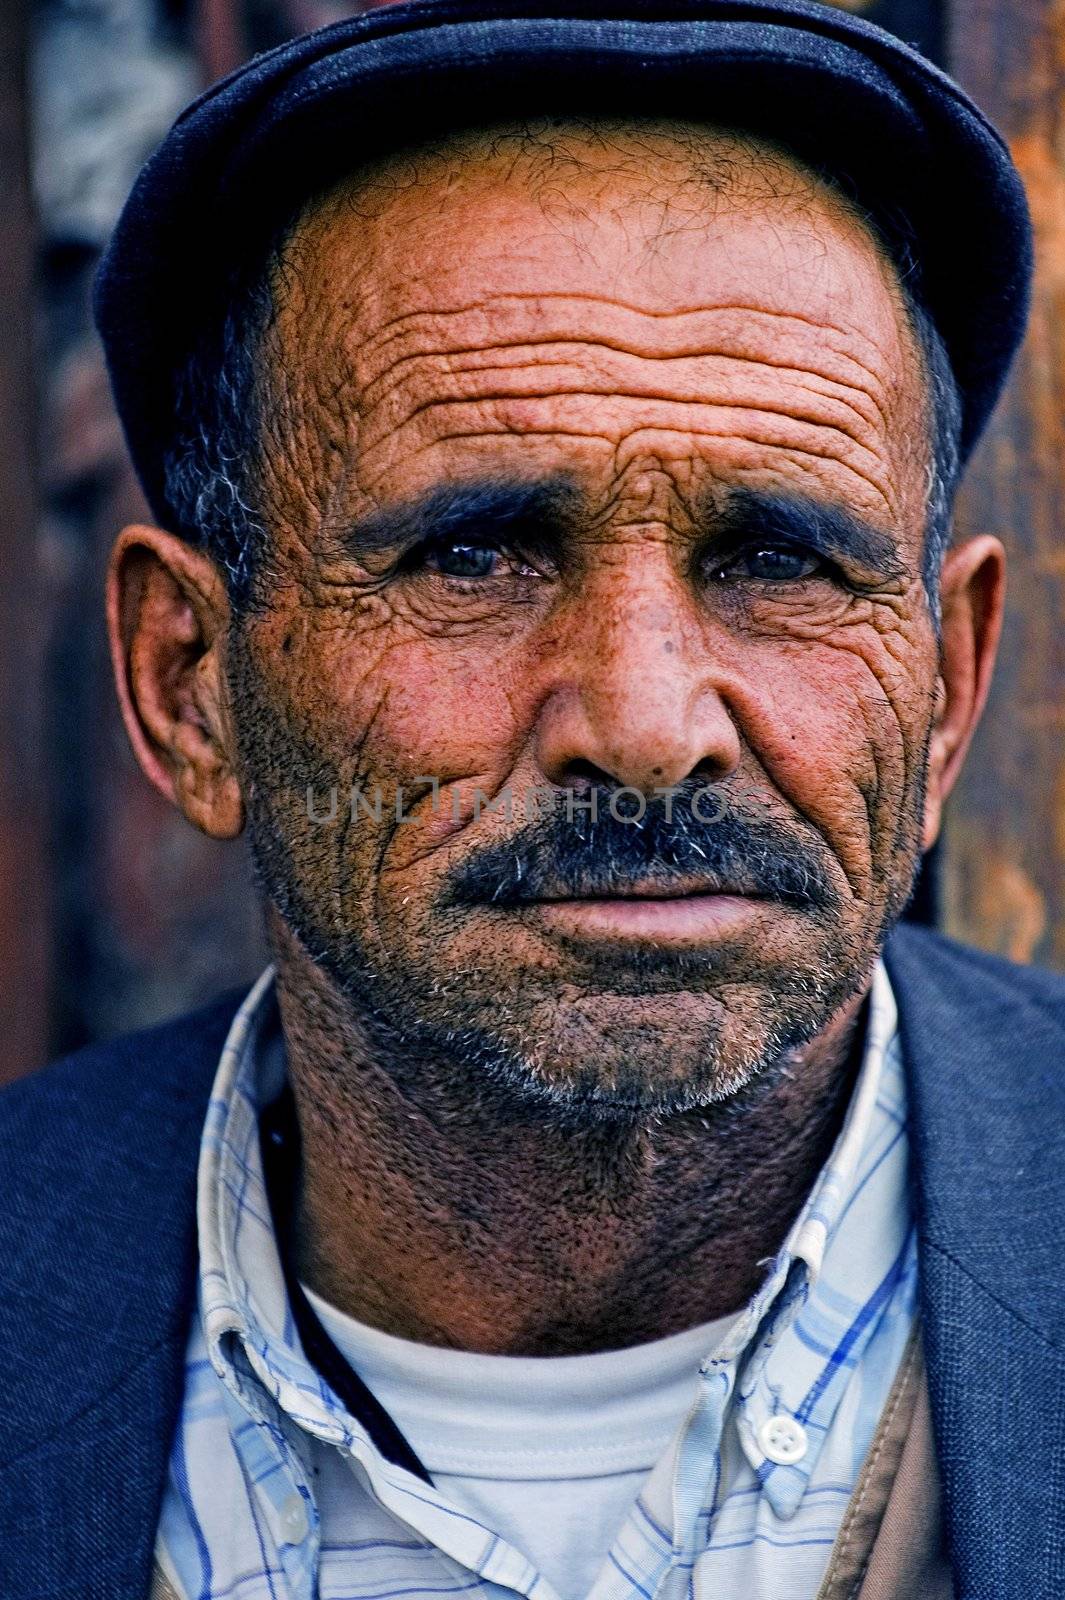 Turkish man by kobby_dagan